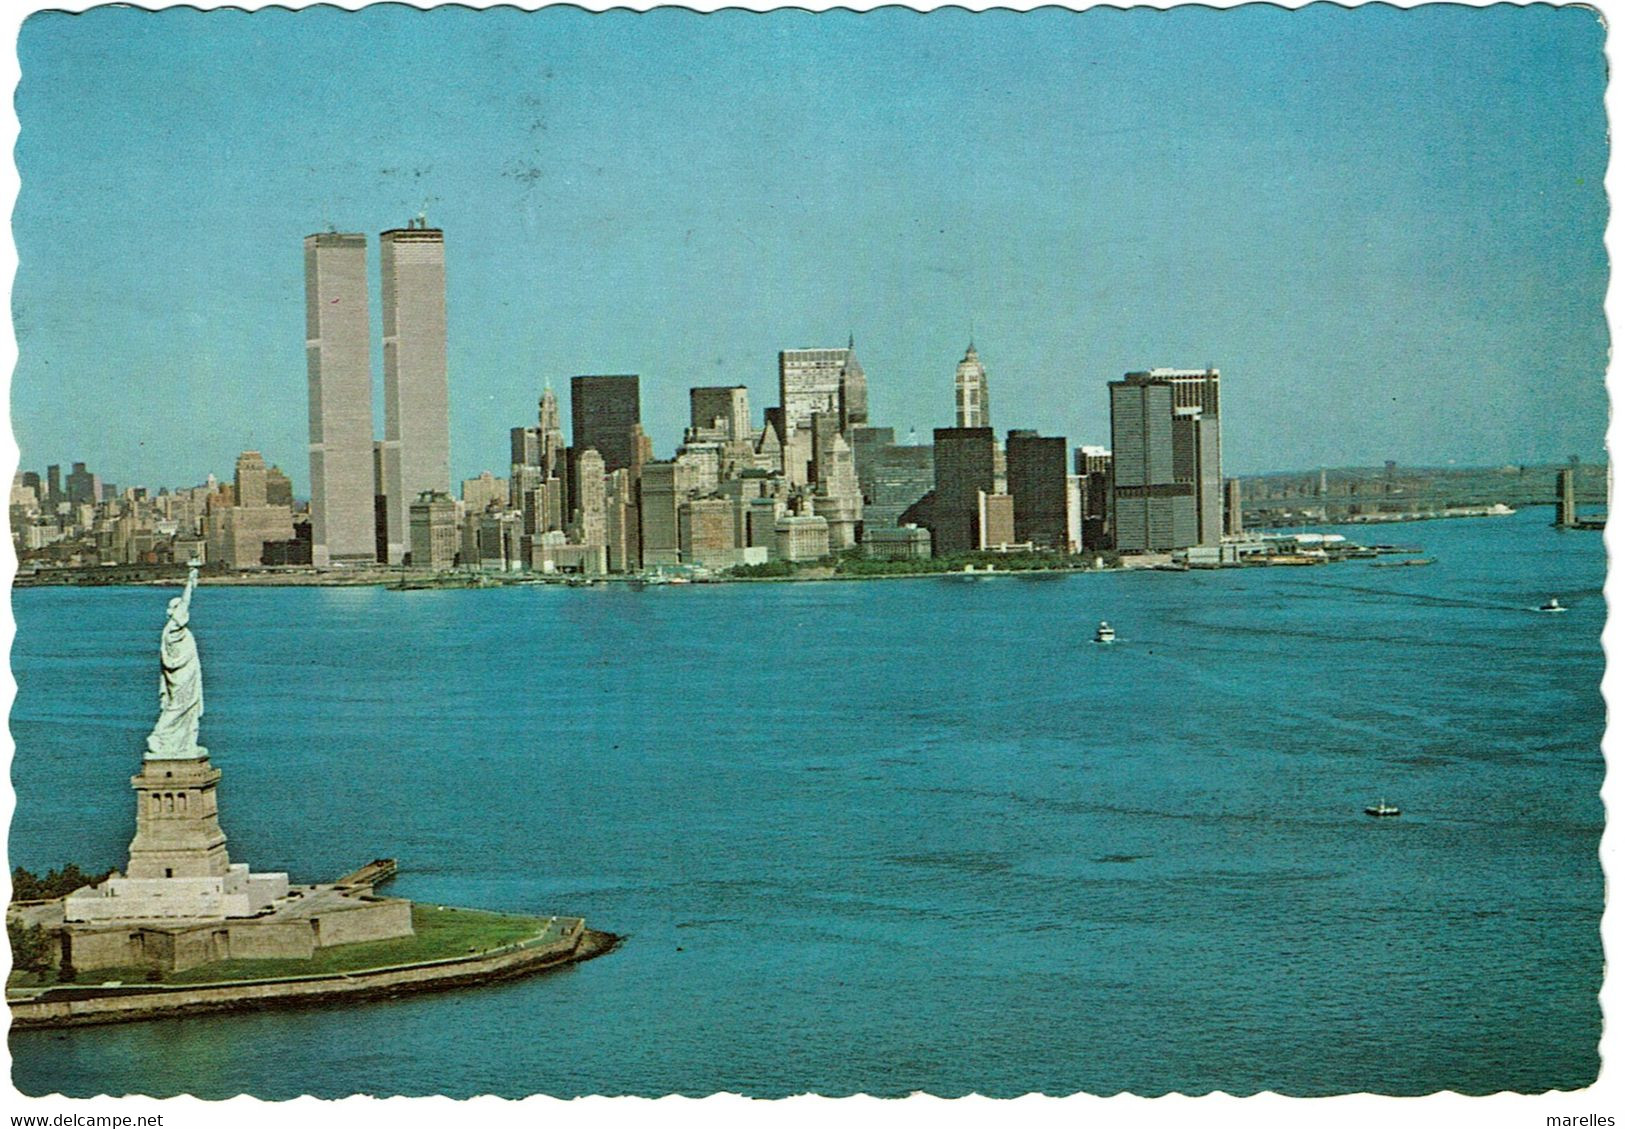 CPSM USA Etats-Unis New York Statue Of Liberty (statue De La Liberté) And The Lower Manhattan, Dentelée, 1974 - Ellis Island